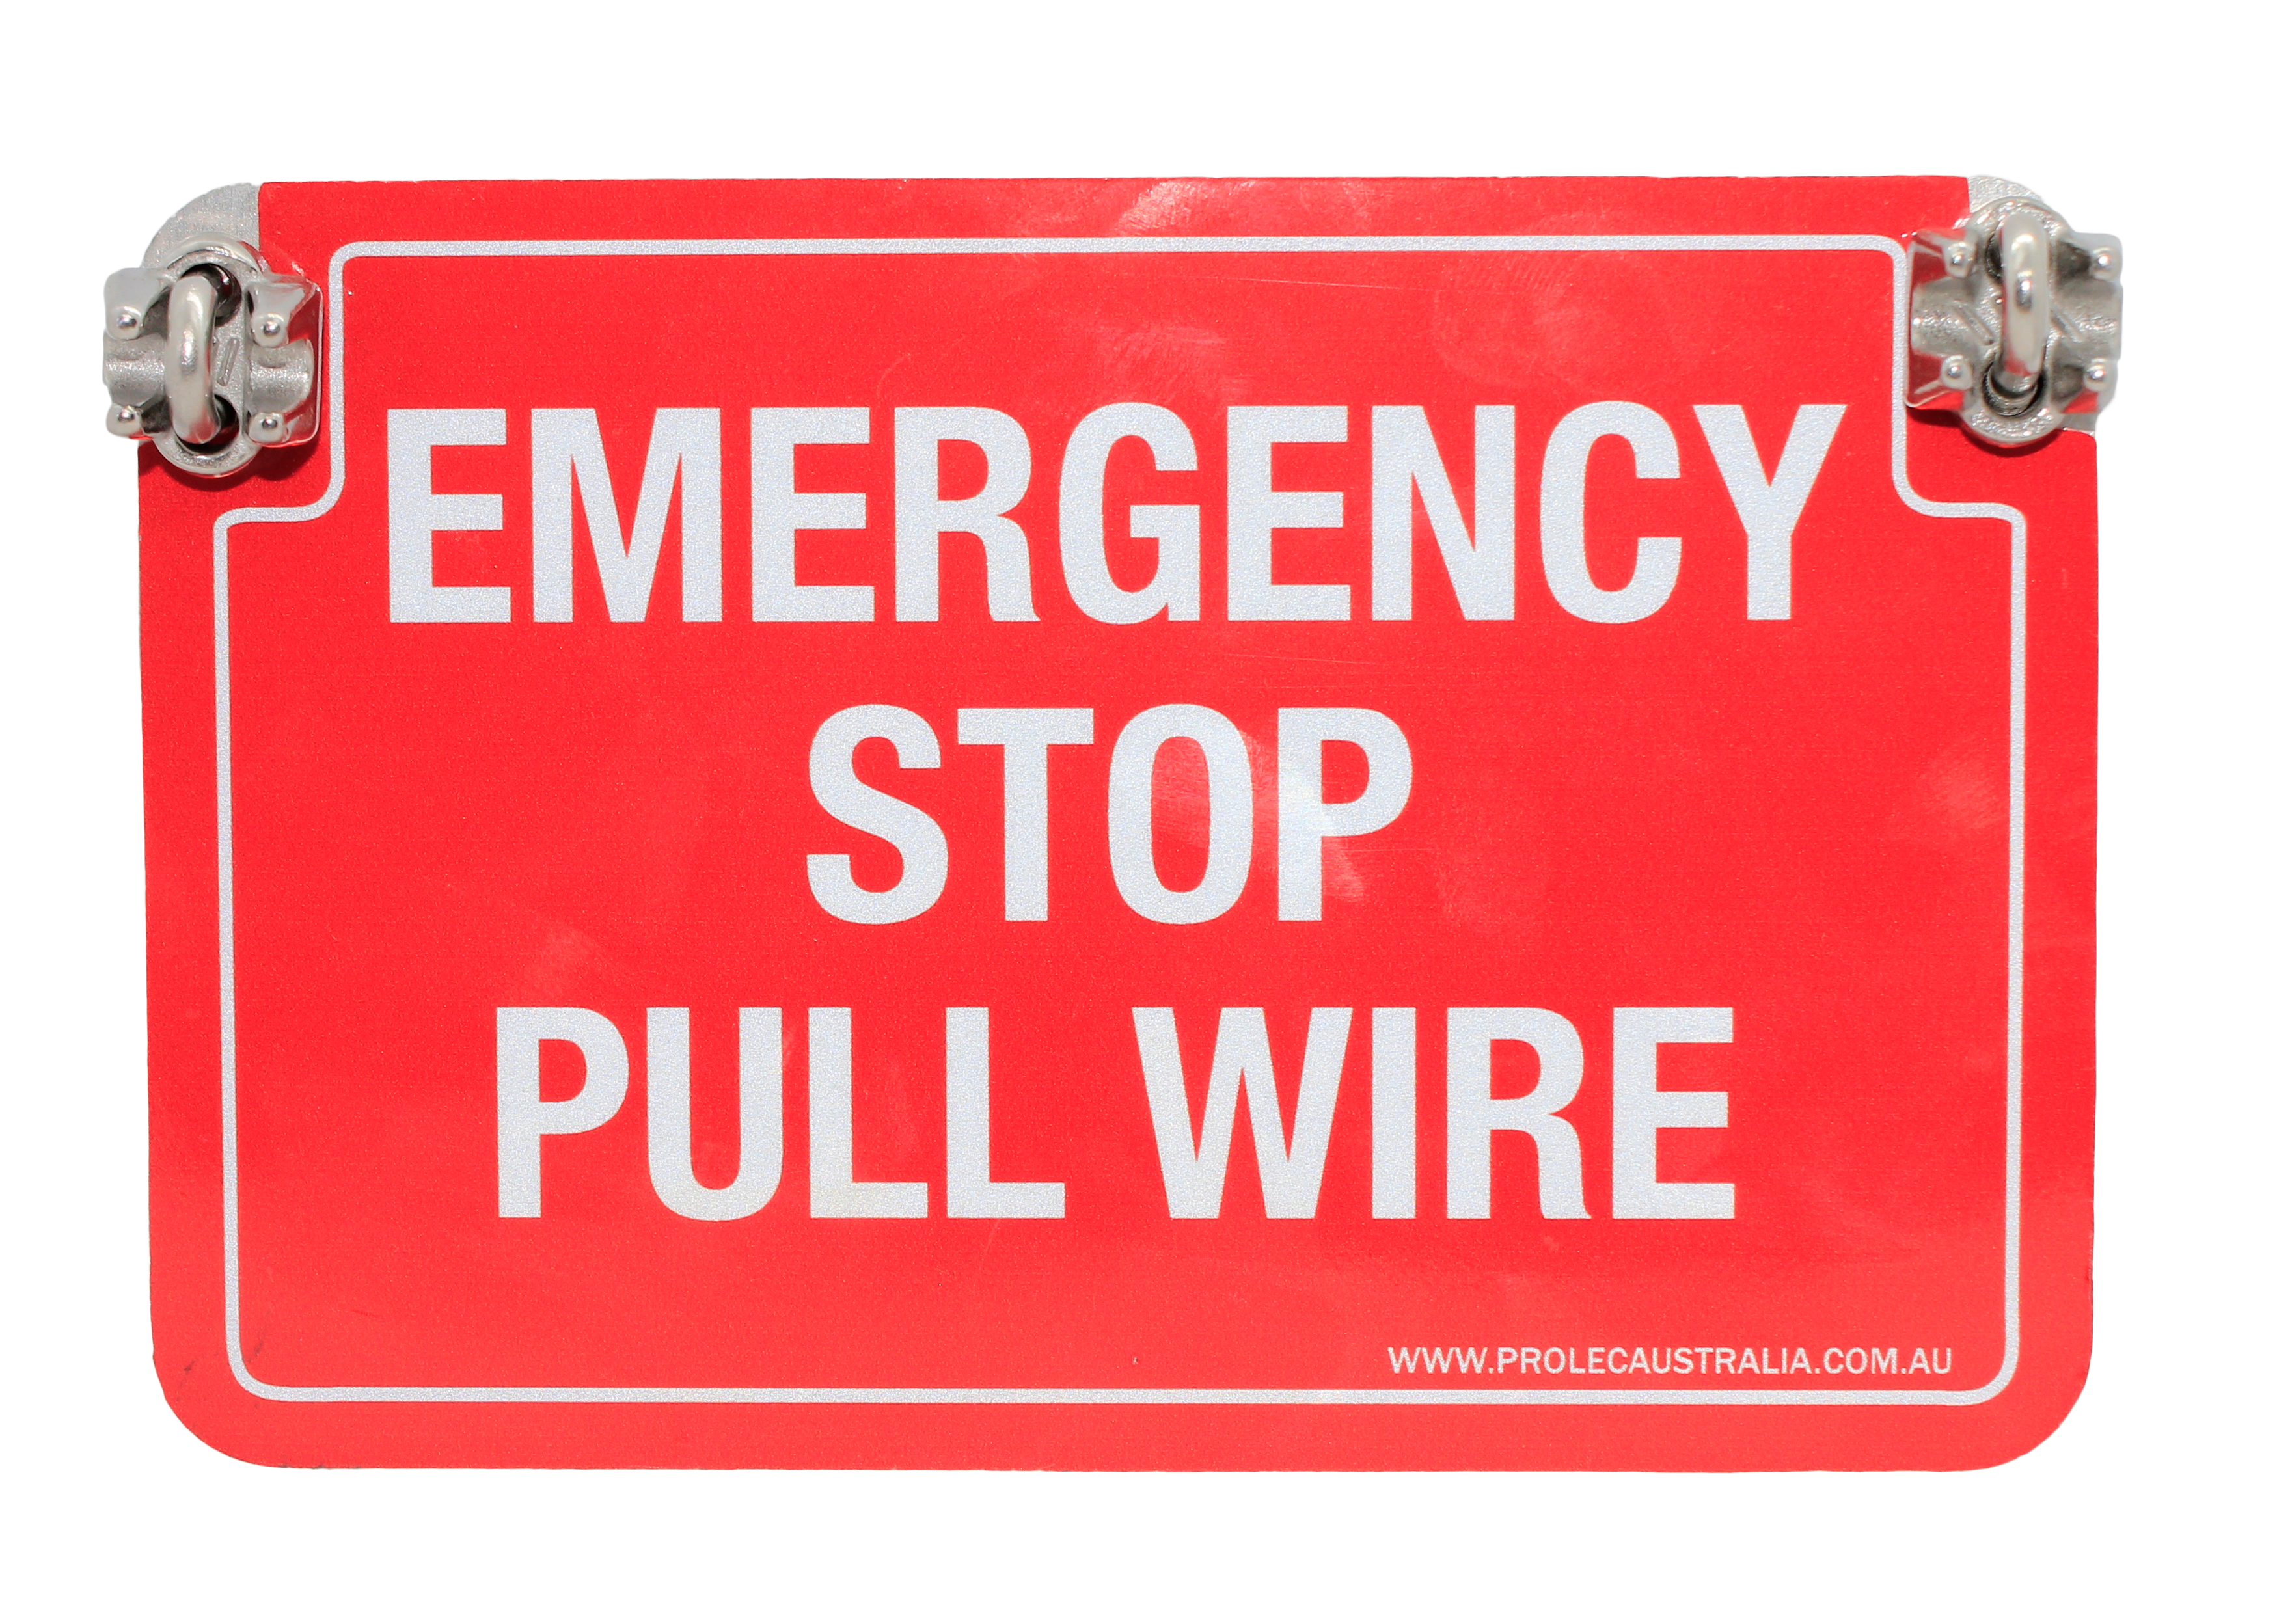 Emergecny Pull wire 1